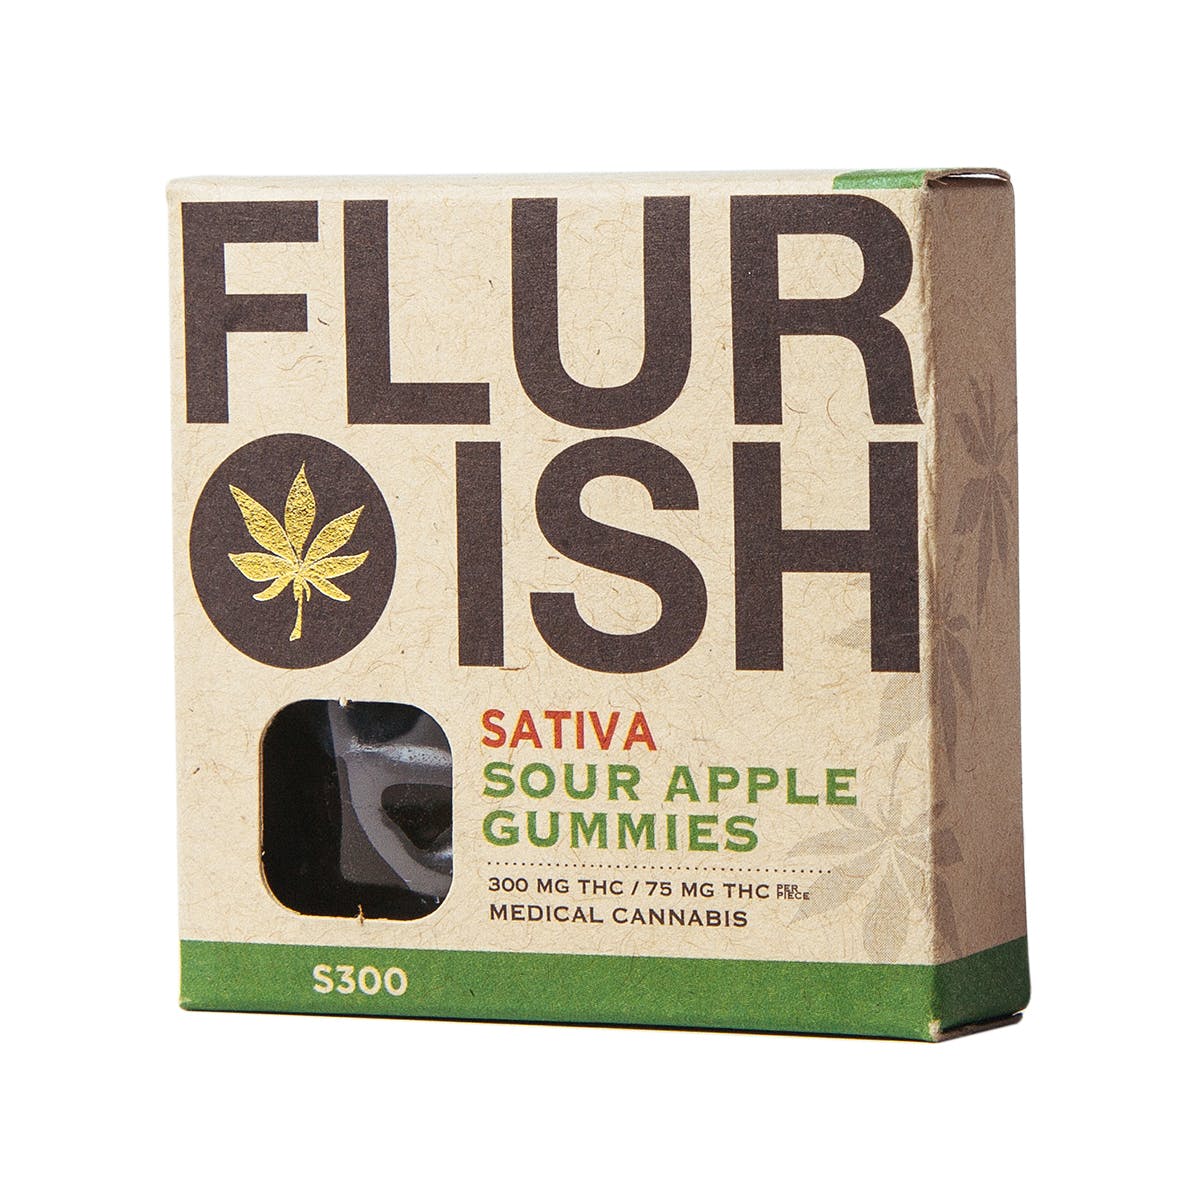 marijuana-dispensaries-bodhi-sattva-in-west-hollywood-sour-apple-gummies-2c-sativa-300mg